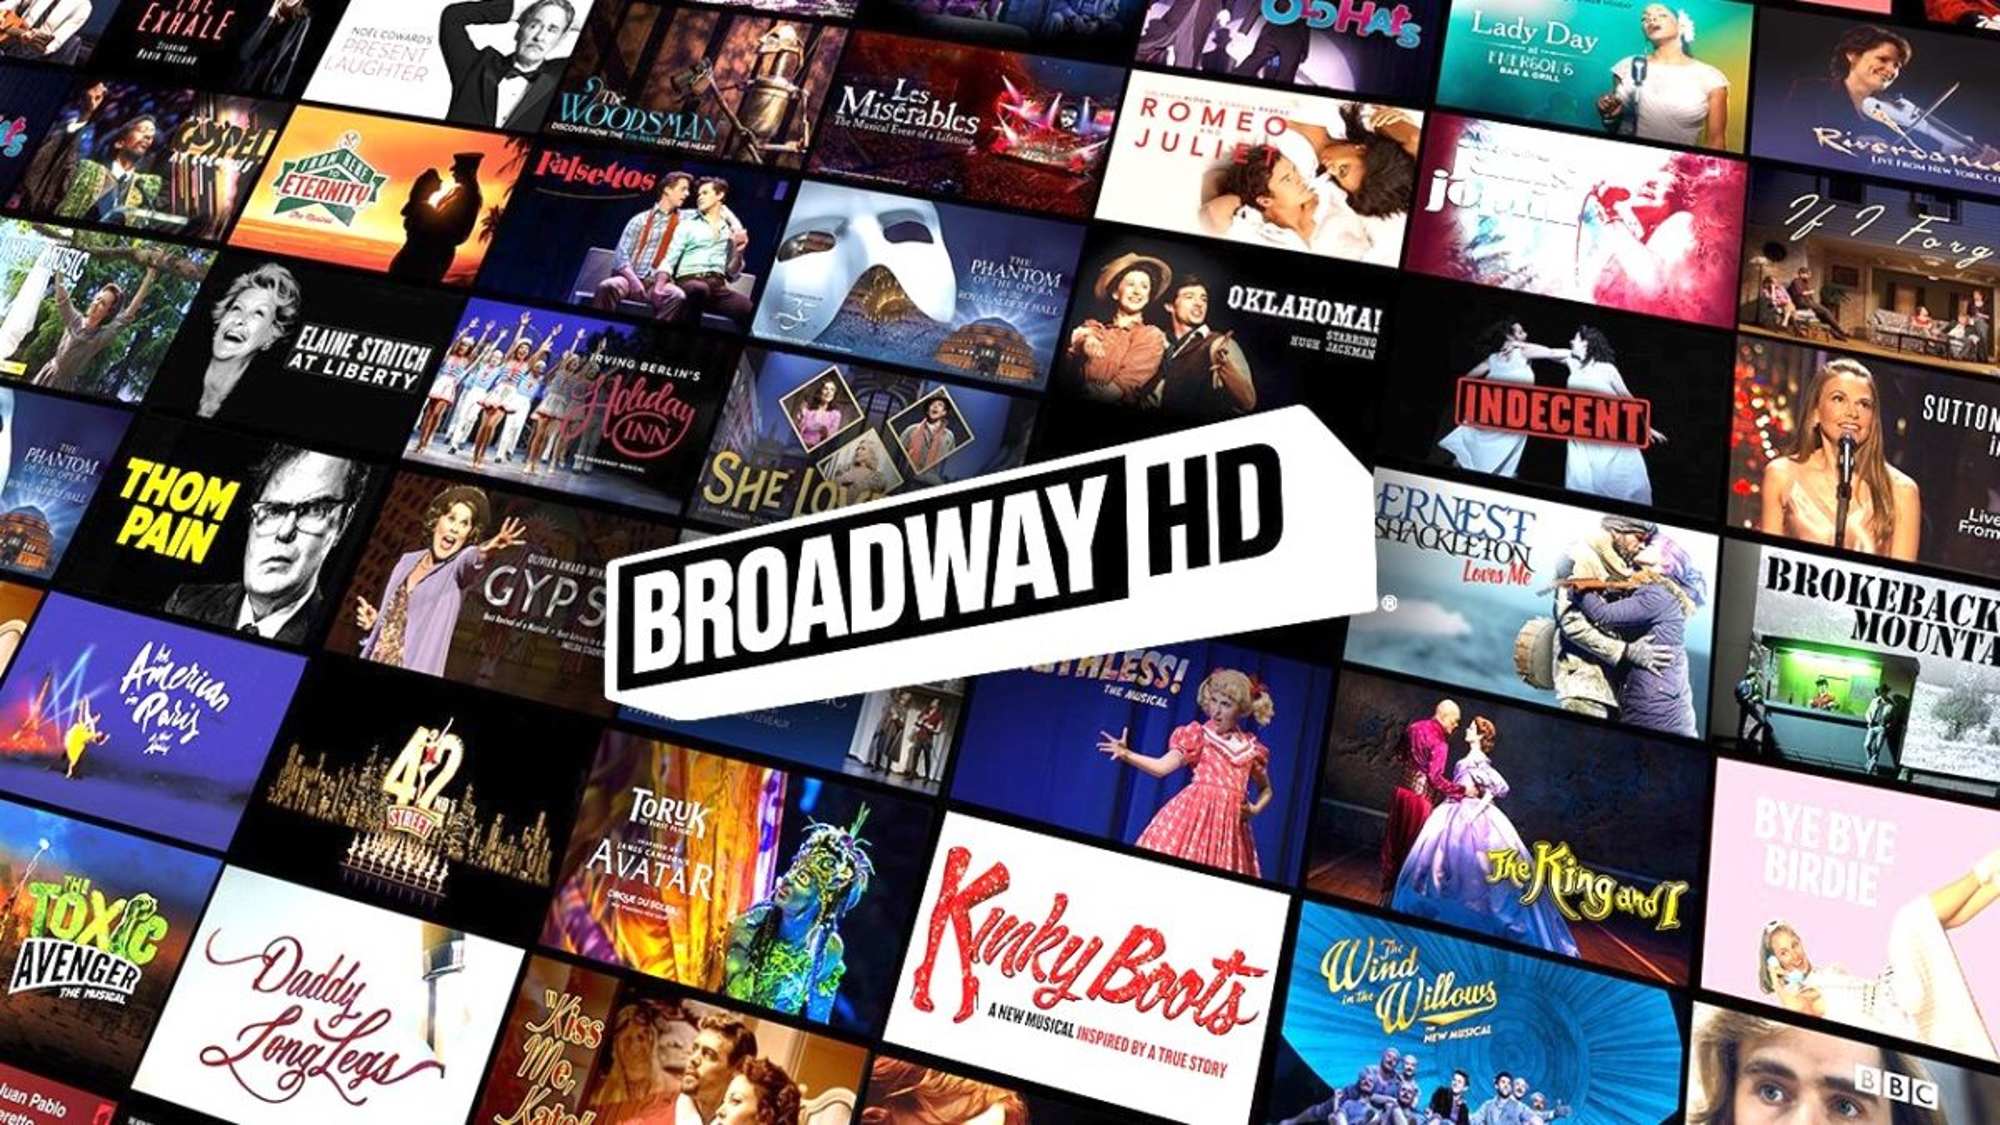 BroadwayHD promo image